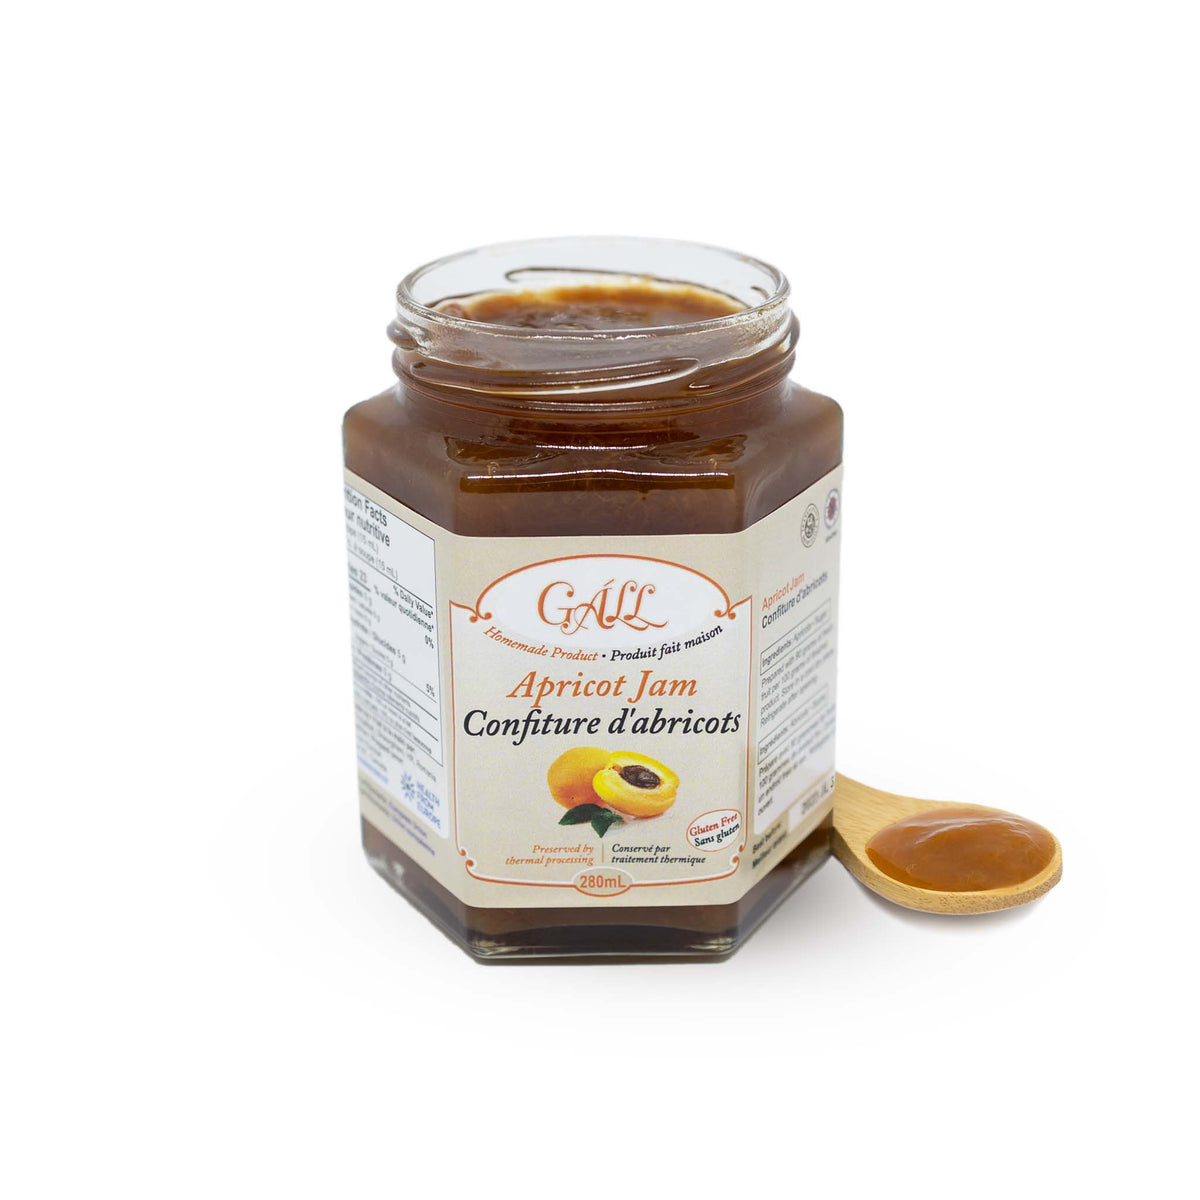 Artisanal Apricot Jam open jar spoon Health from Europe